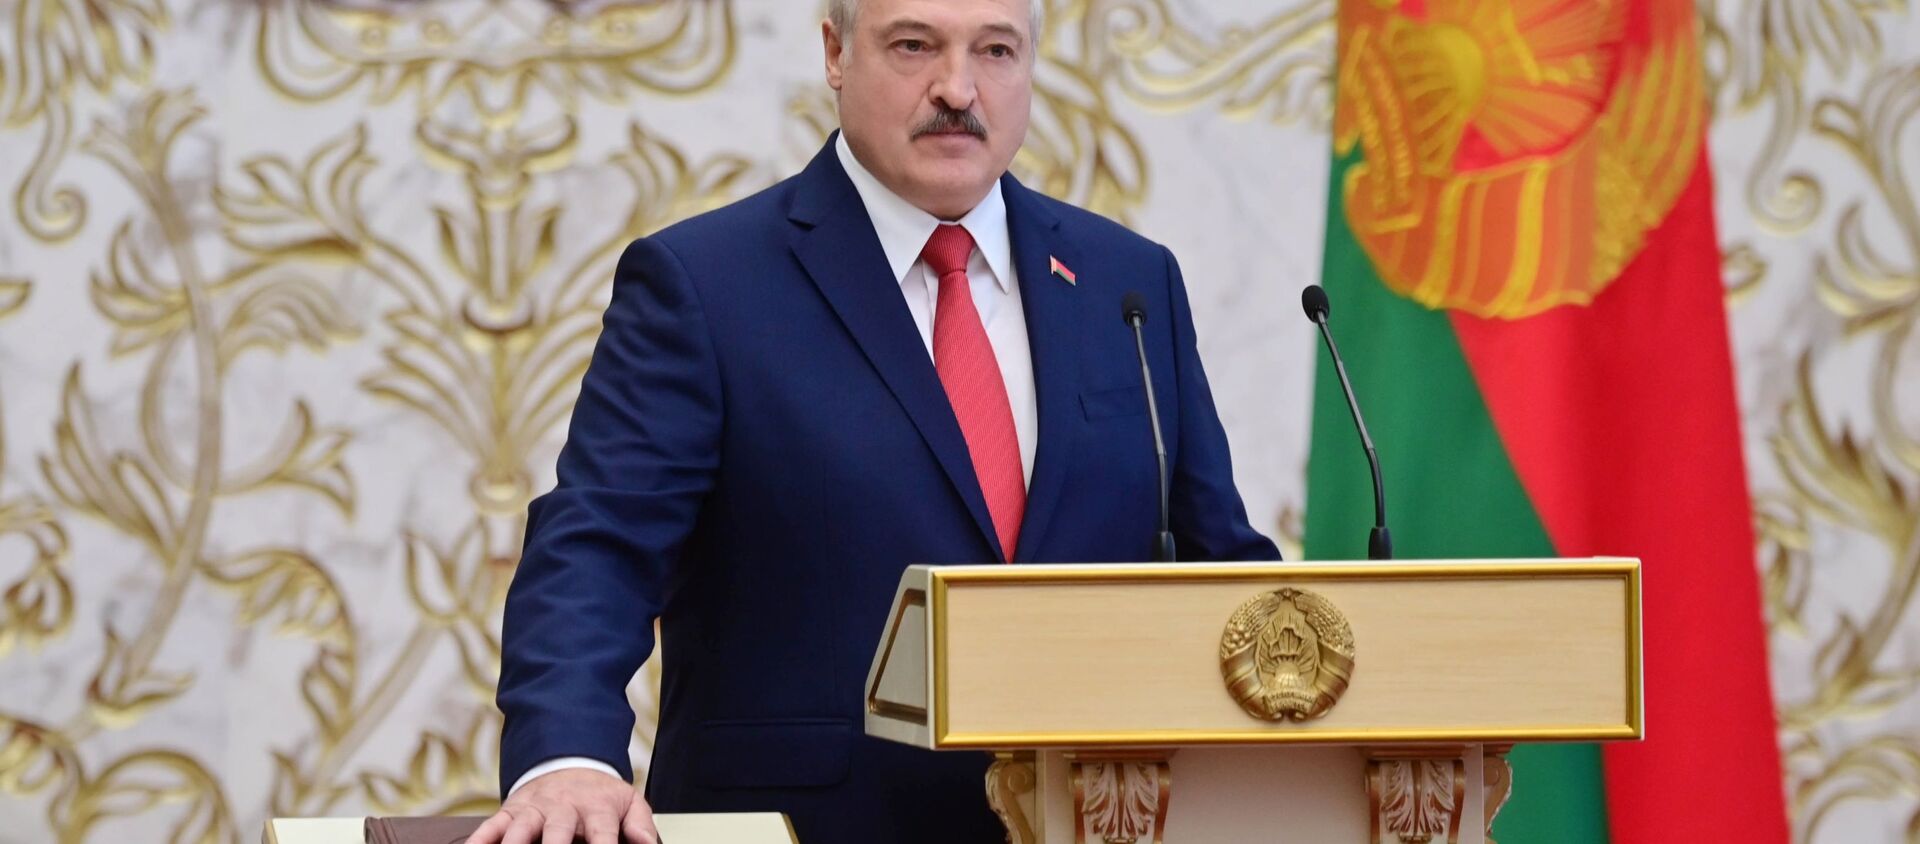 Президент Белоруссии Александр Лукашенко на церемонии инаугурации в Минске - Sputnik Узбекистан, 1920, 27.10.2020